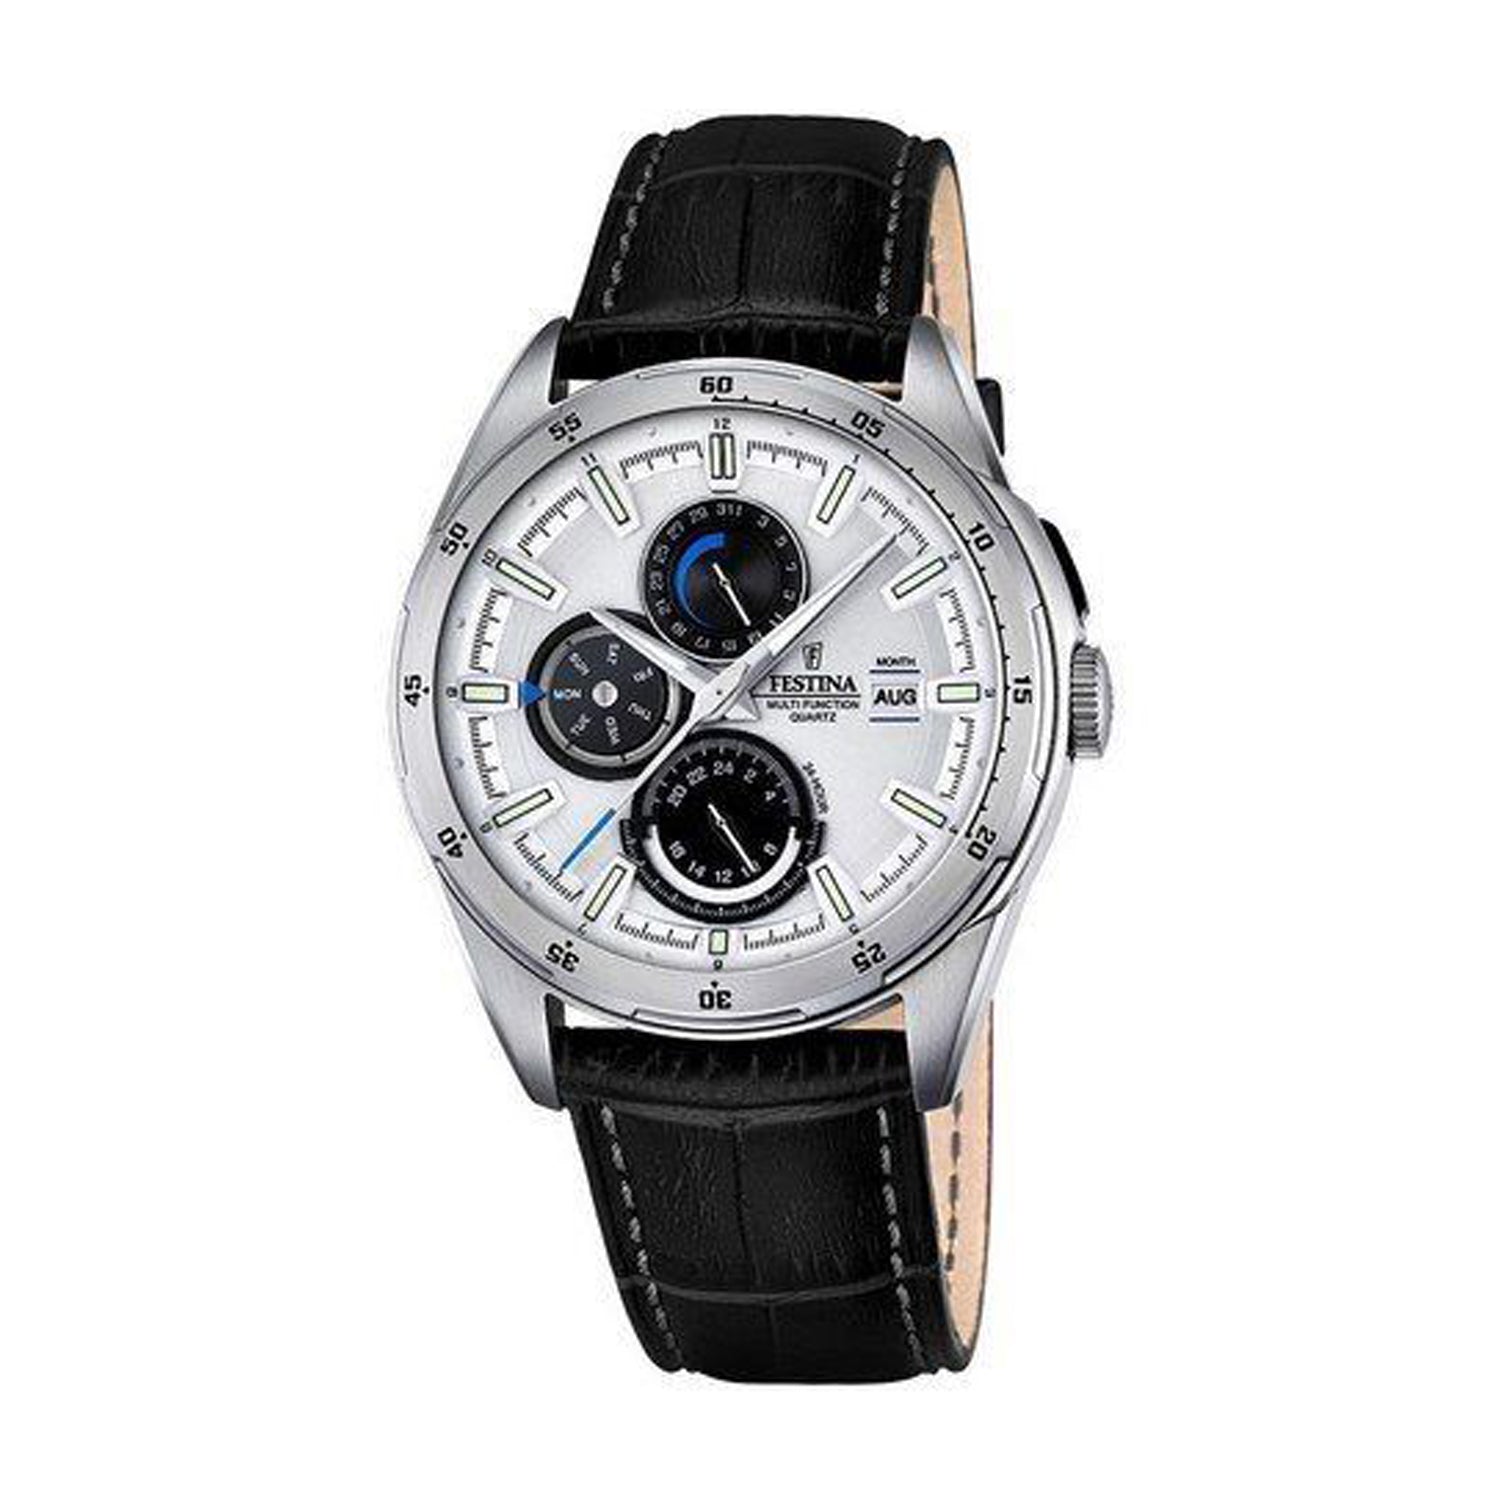 Men's watch, quartz movement, blue dial - f20357/c